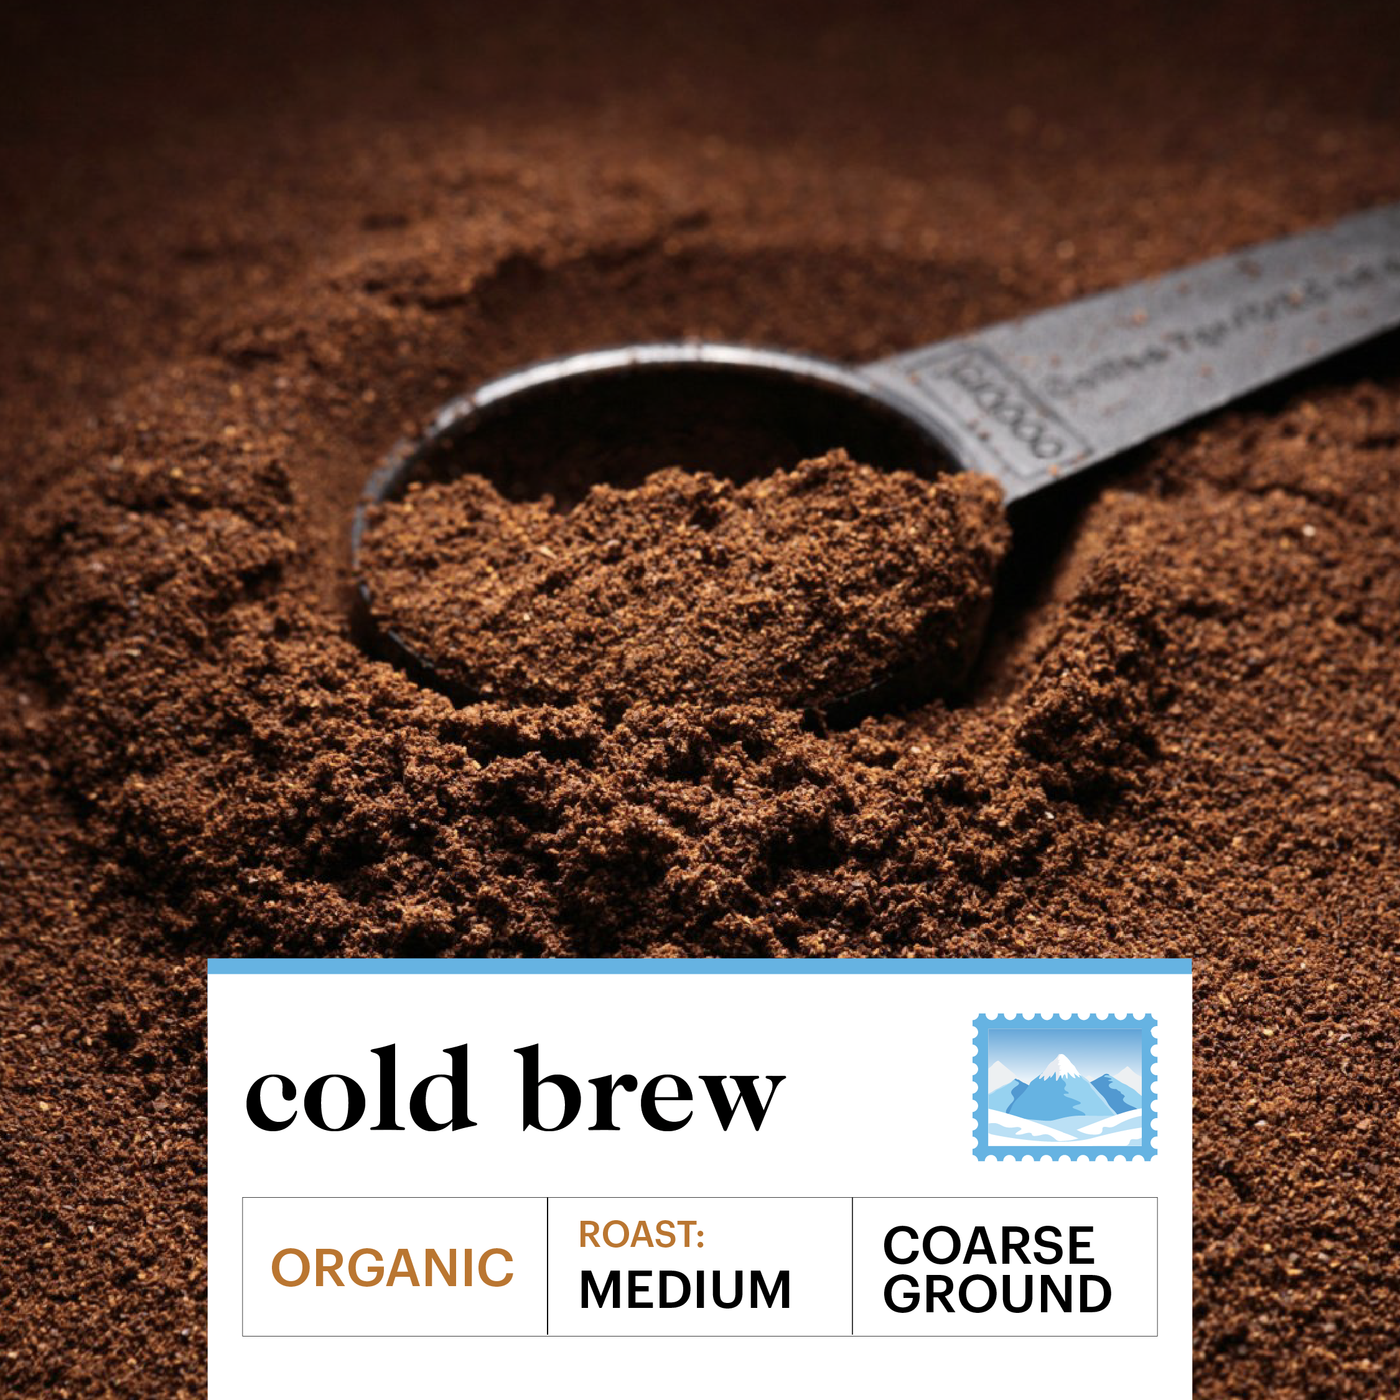 Cold Brew Ground Coffee 12 oz Coffee Bag